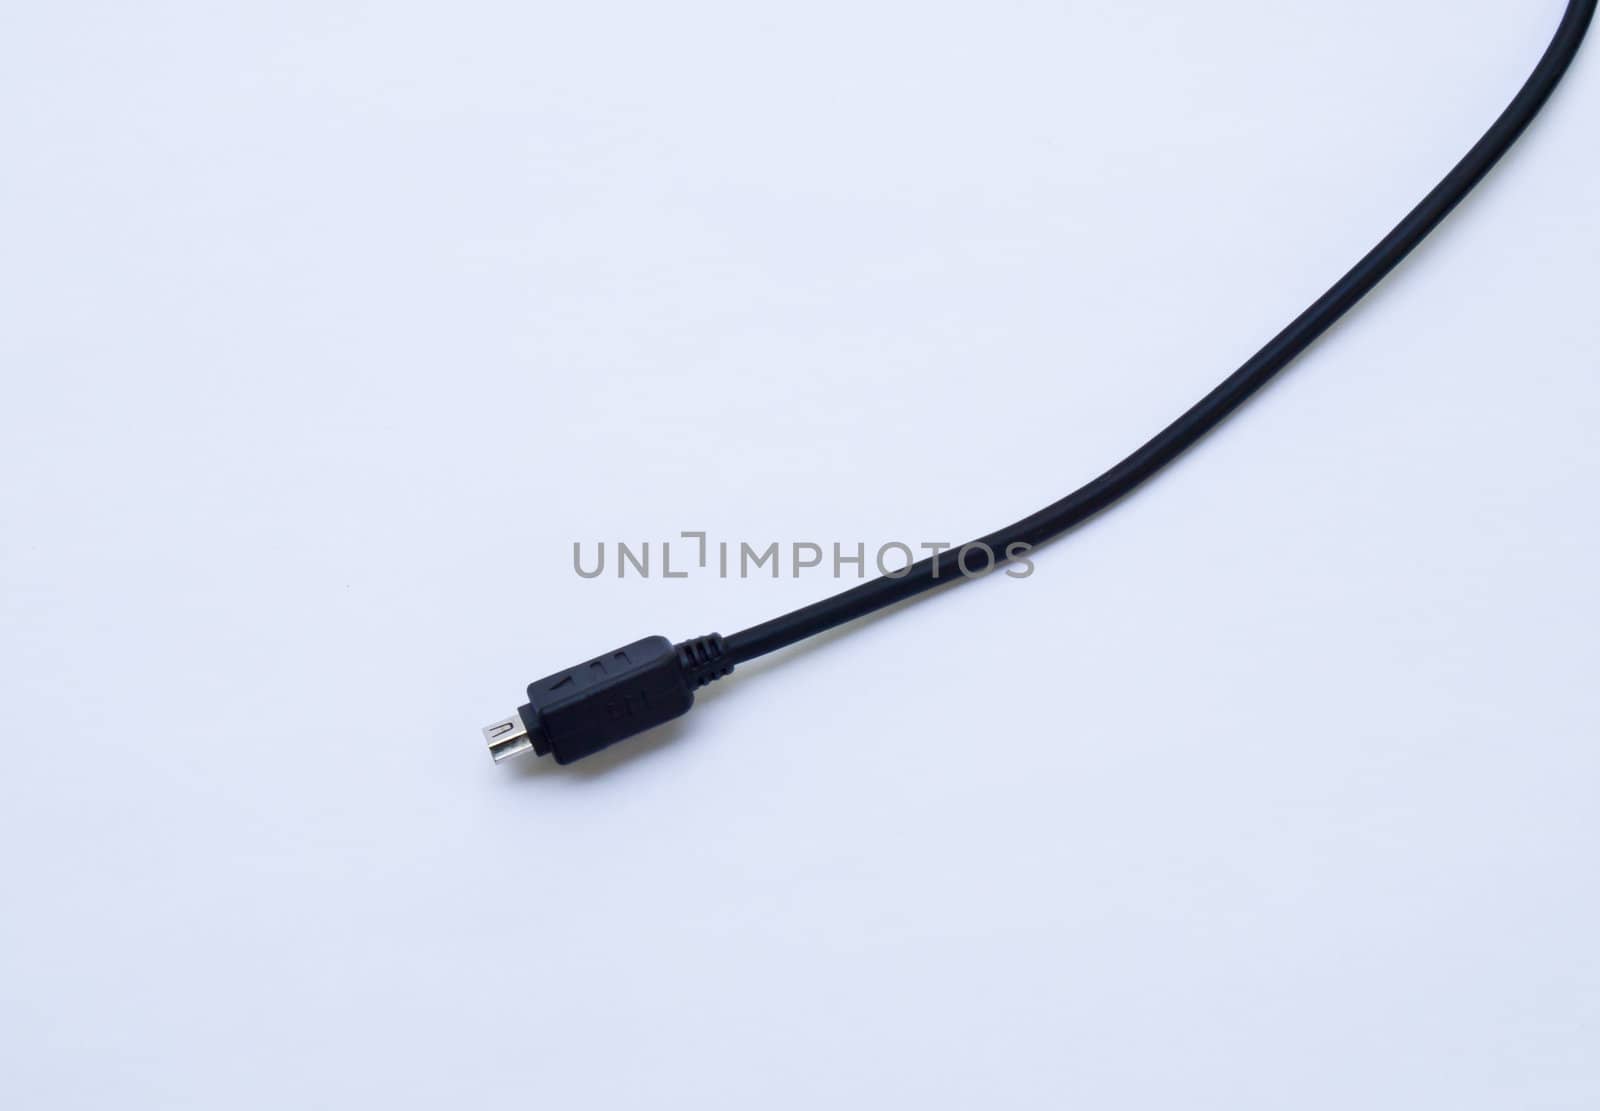 Black usb cable isolated on white background by gururugu